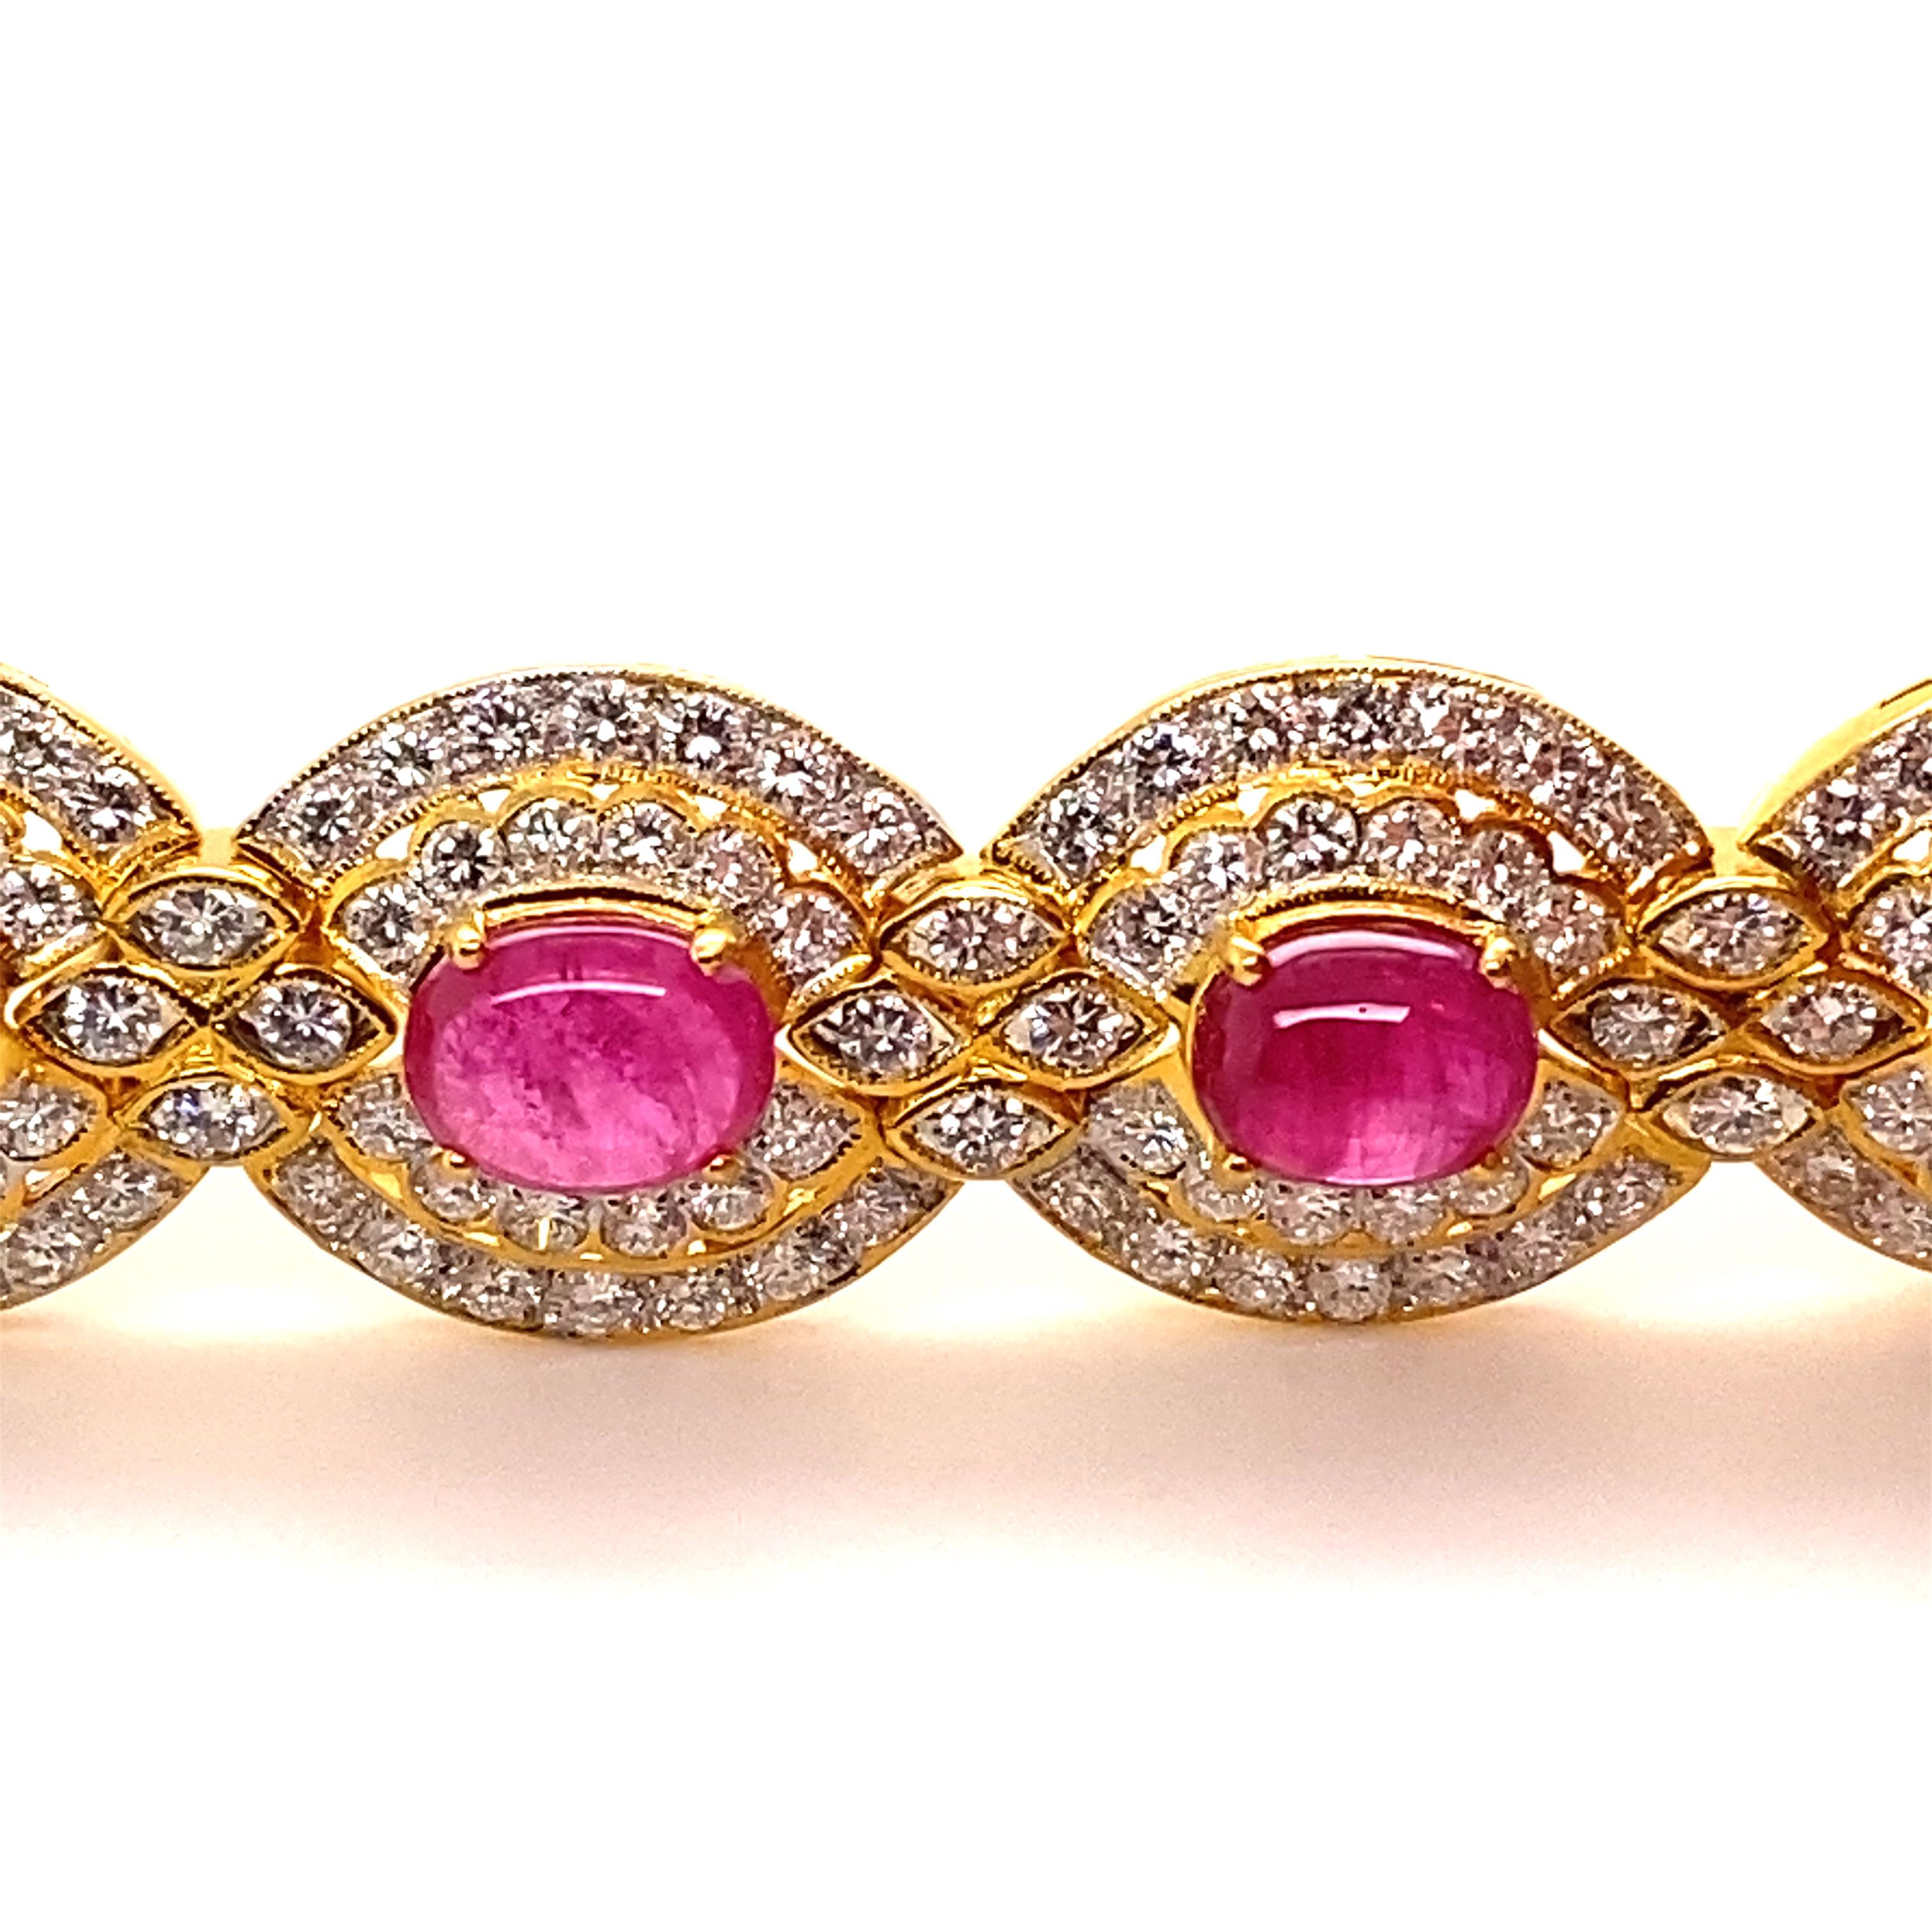 Modern Splendid Ruby and Diamond Bracelet in 18 Karat Yellow Gold